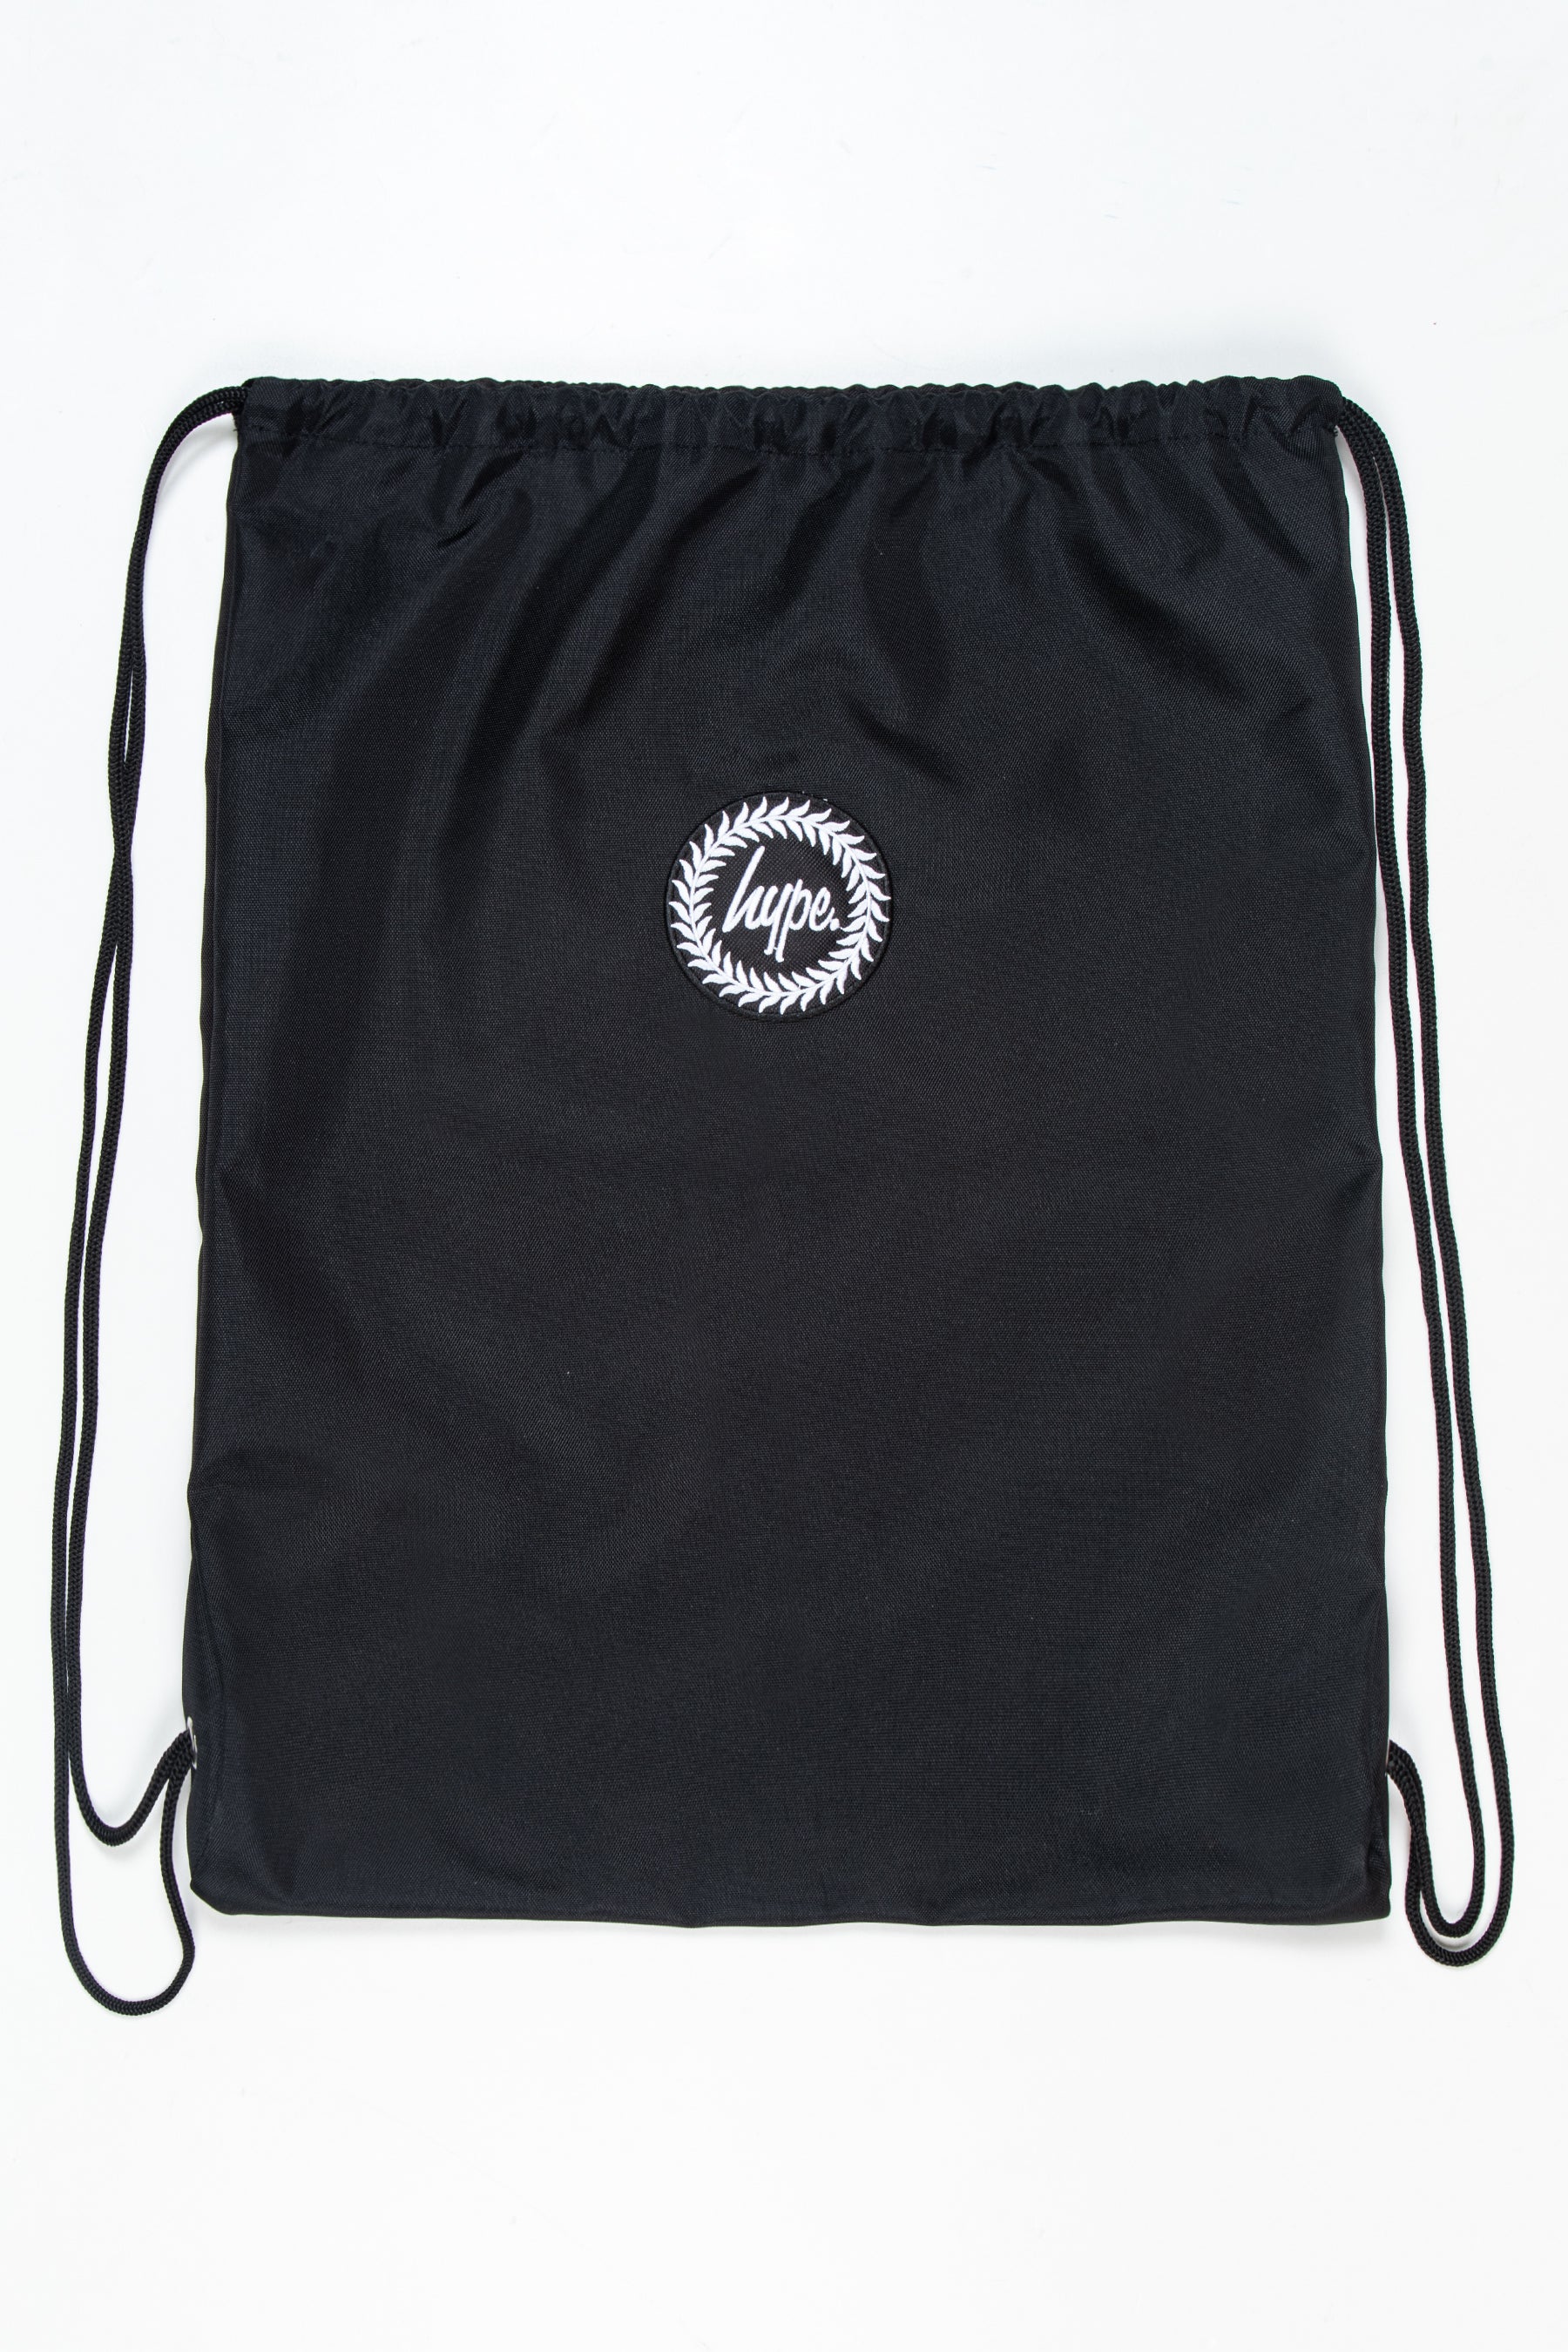 hype black crest drawstring bag